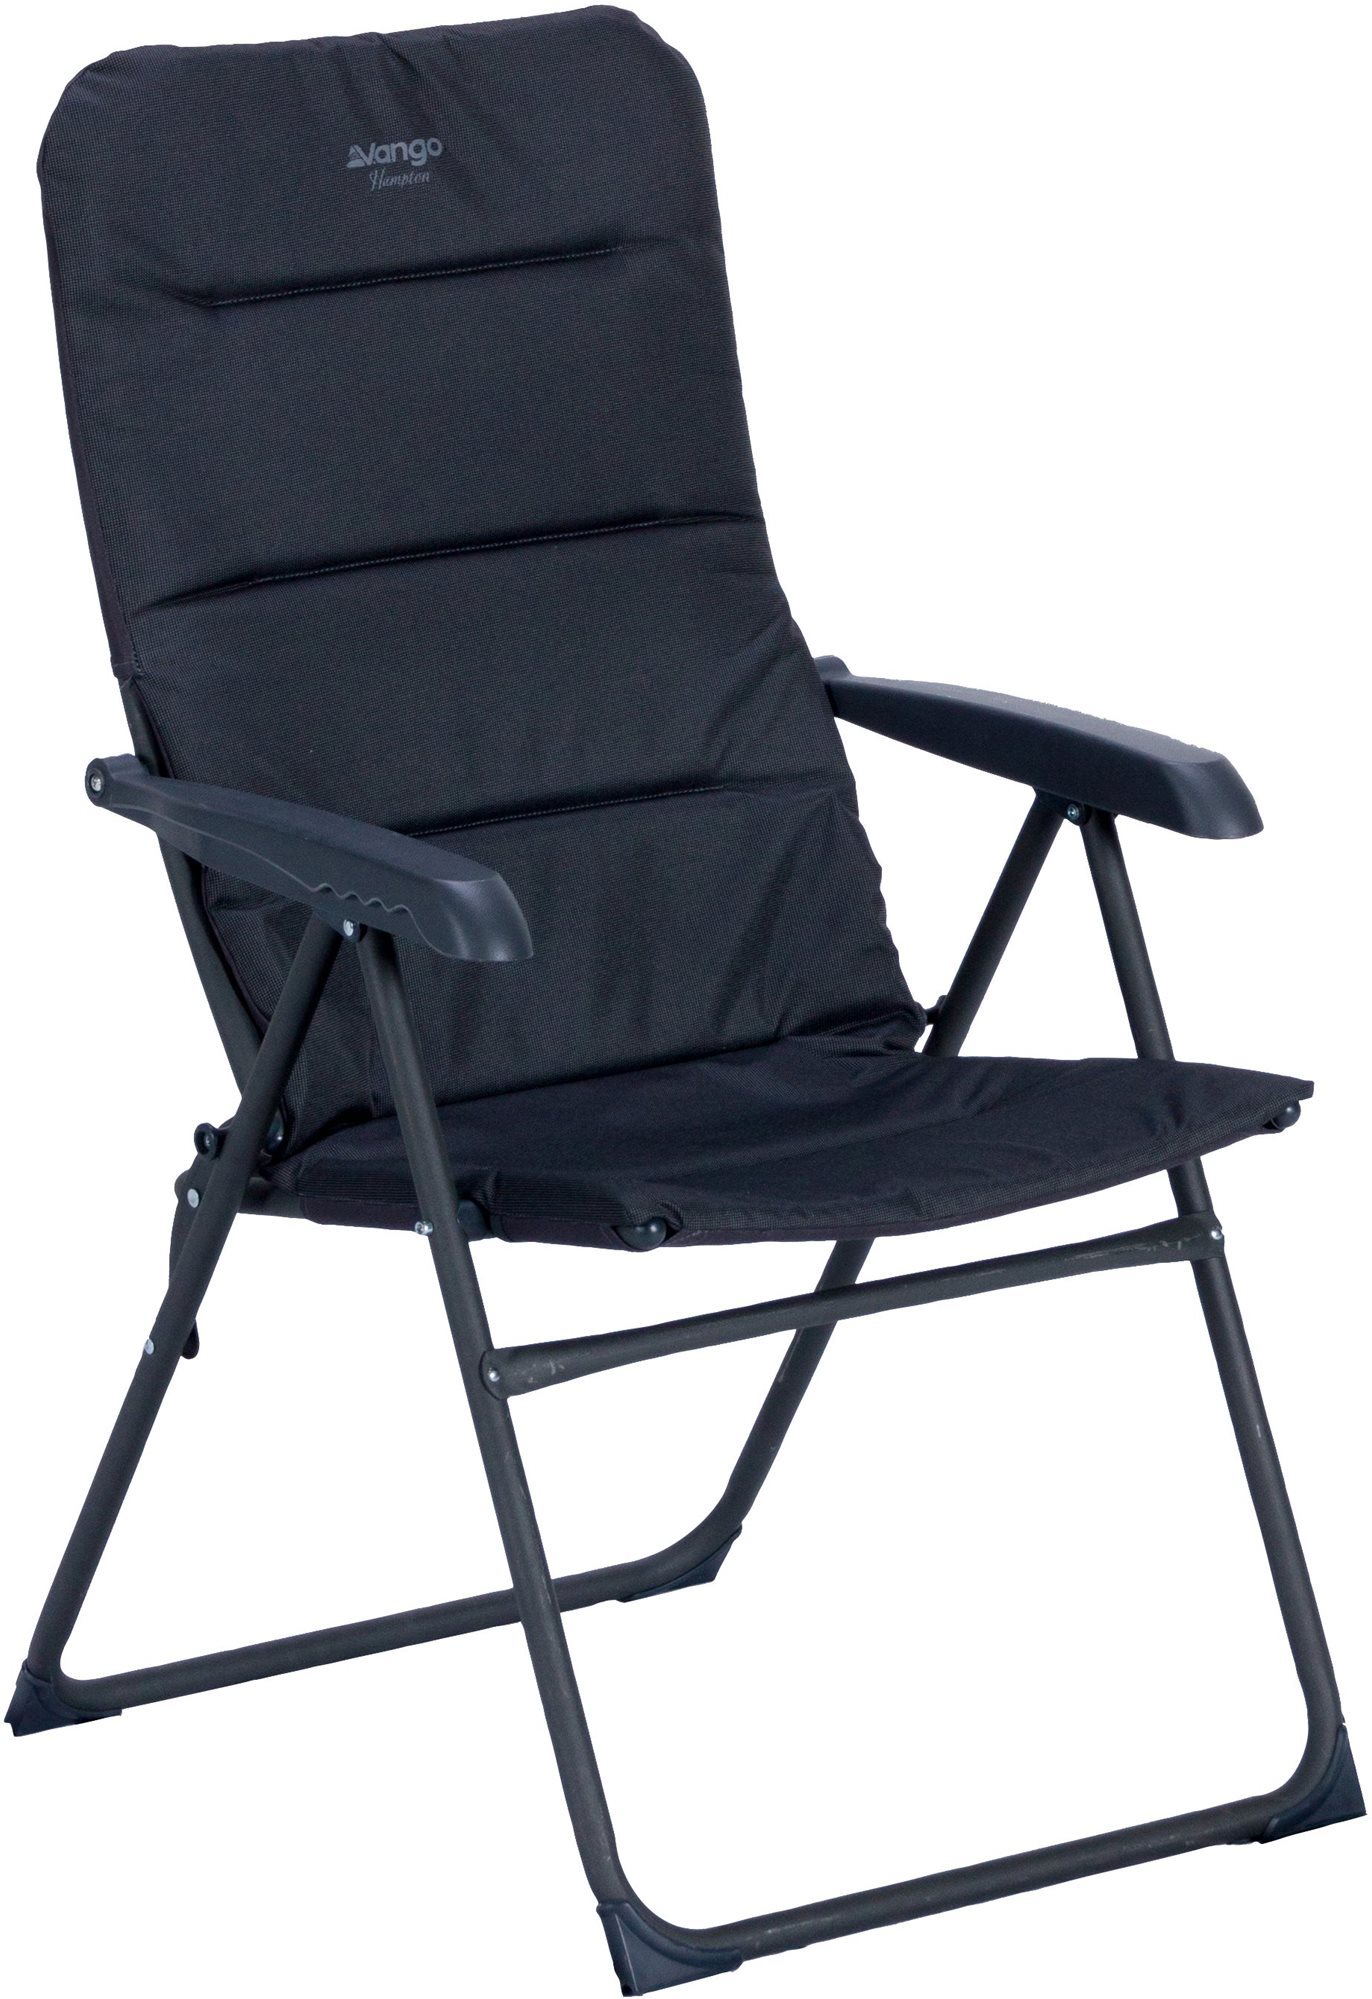 Vango Hampton Chair Excalibur Tall